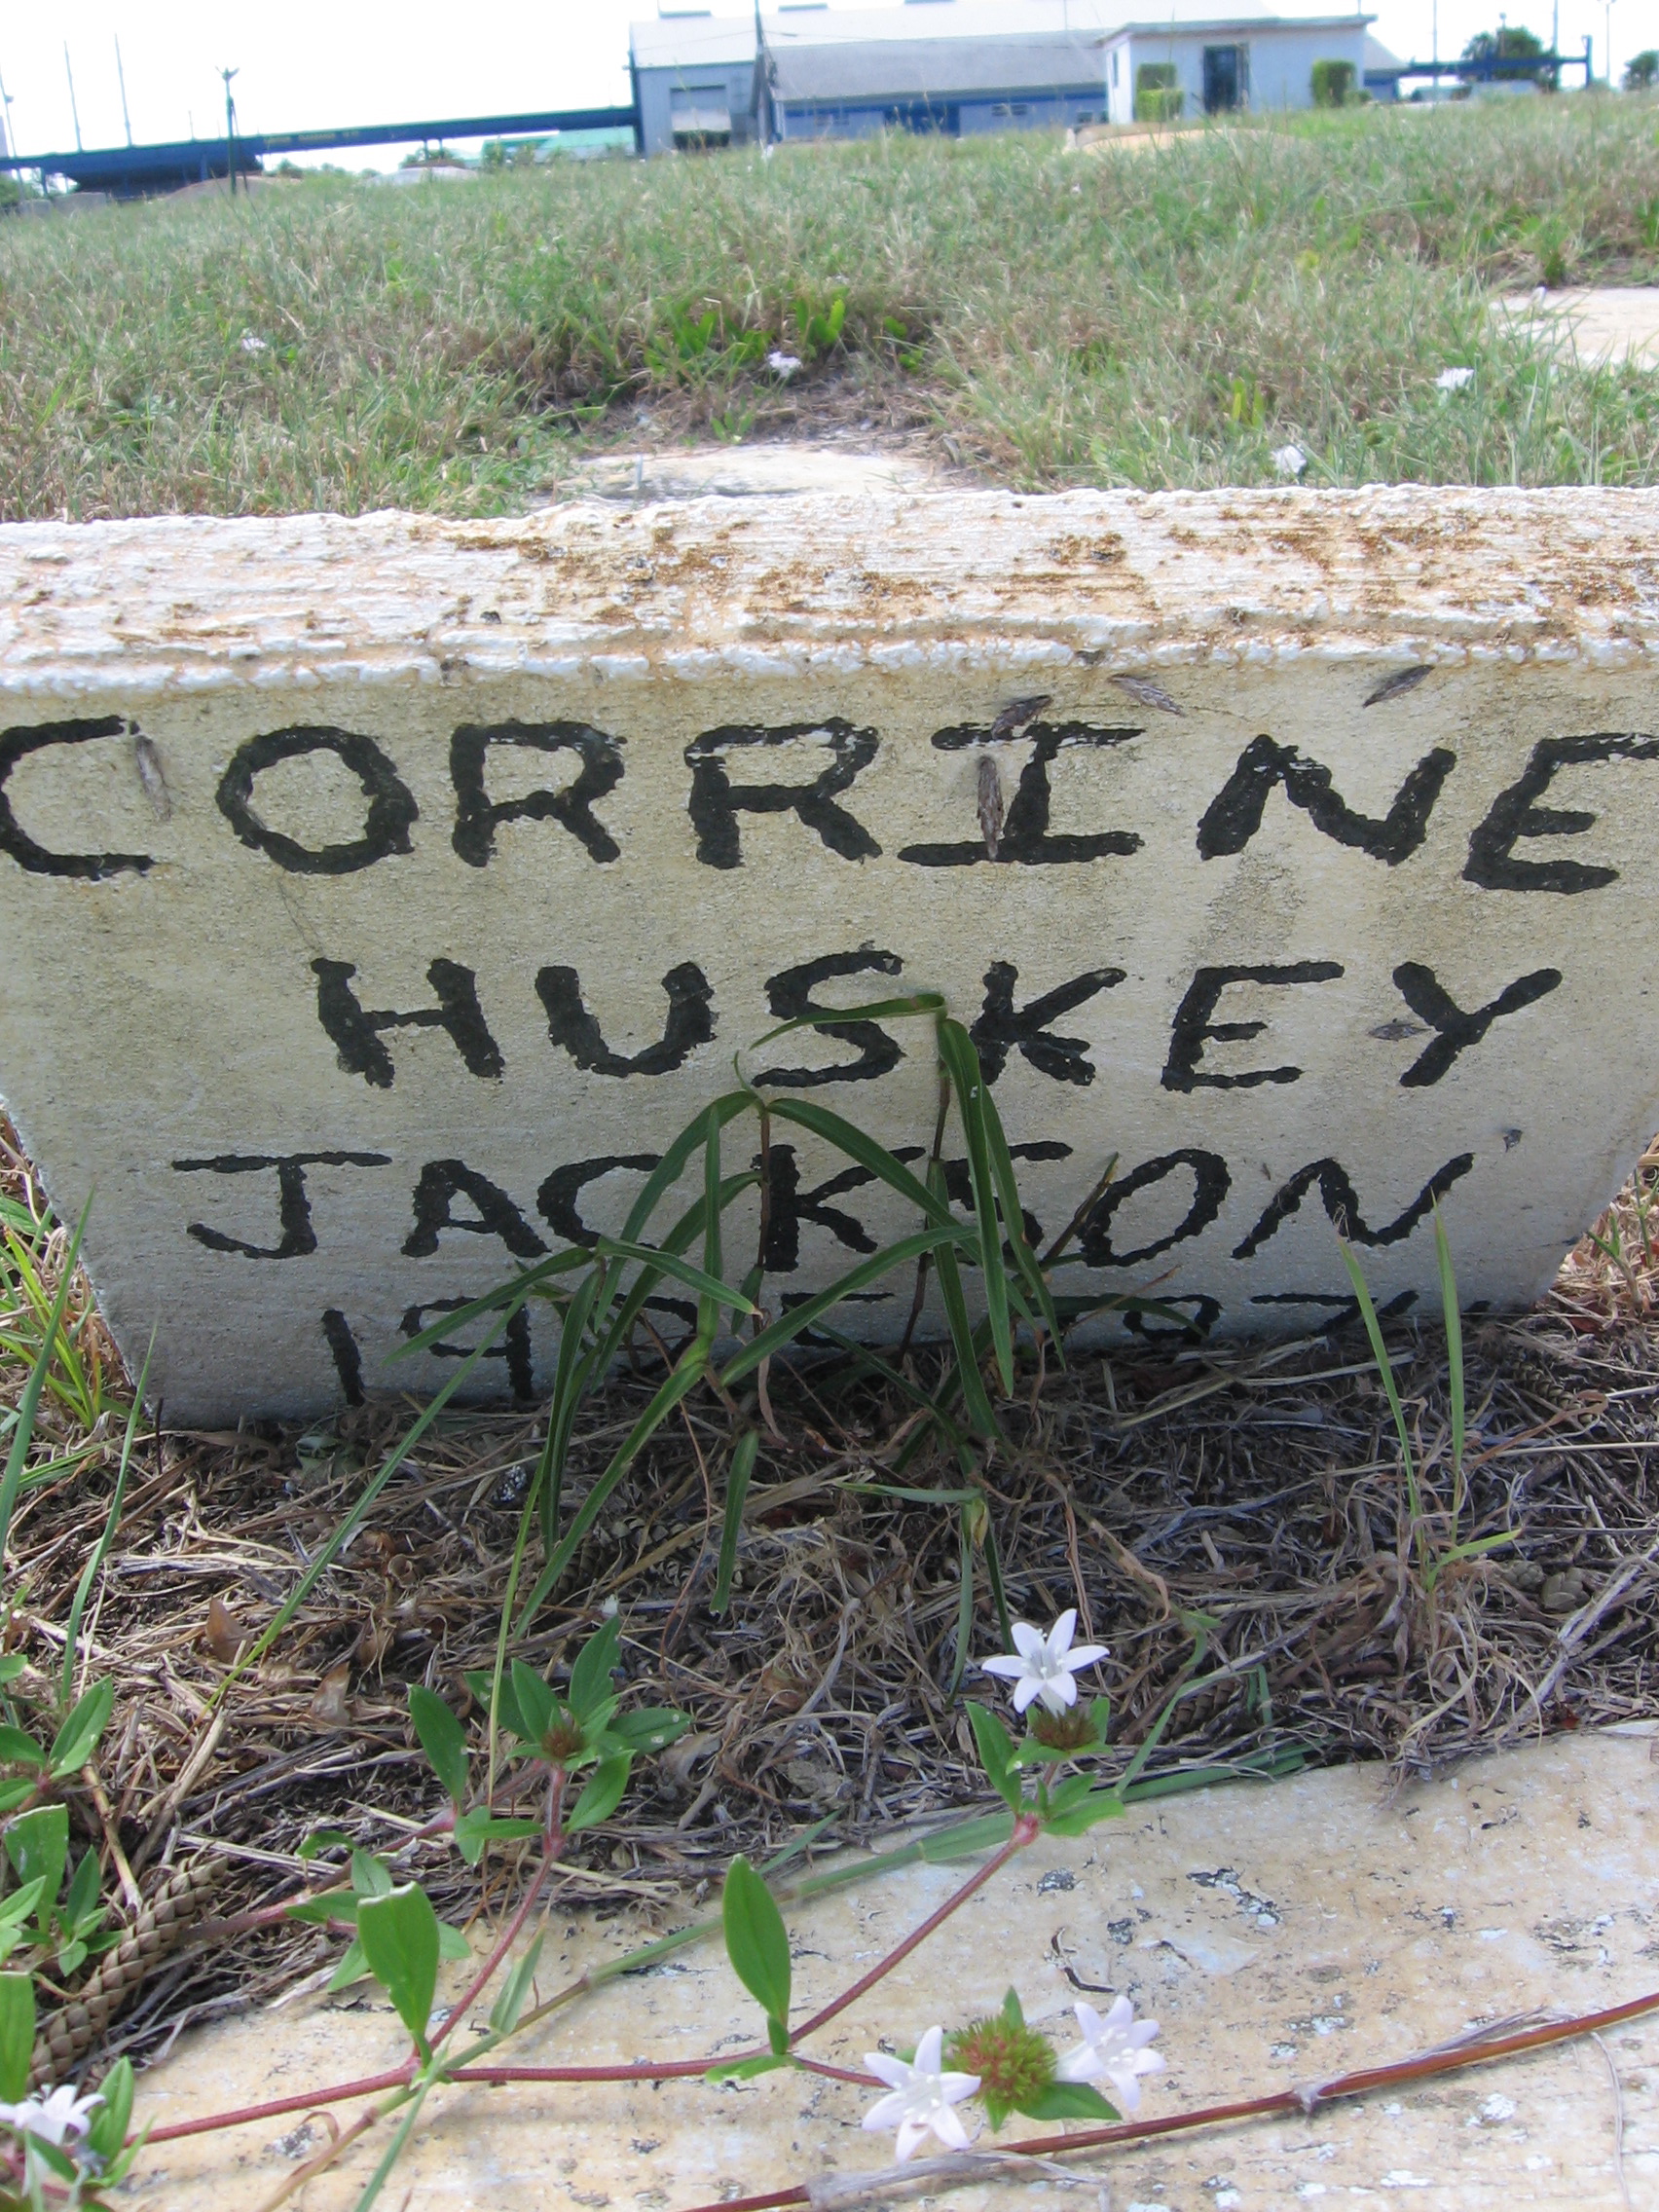 Corrine Huskey Jackson